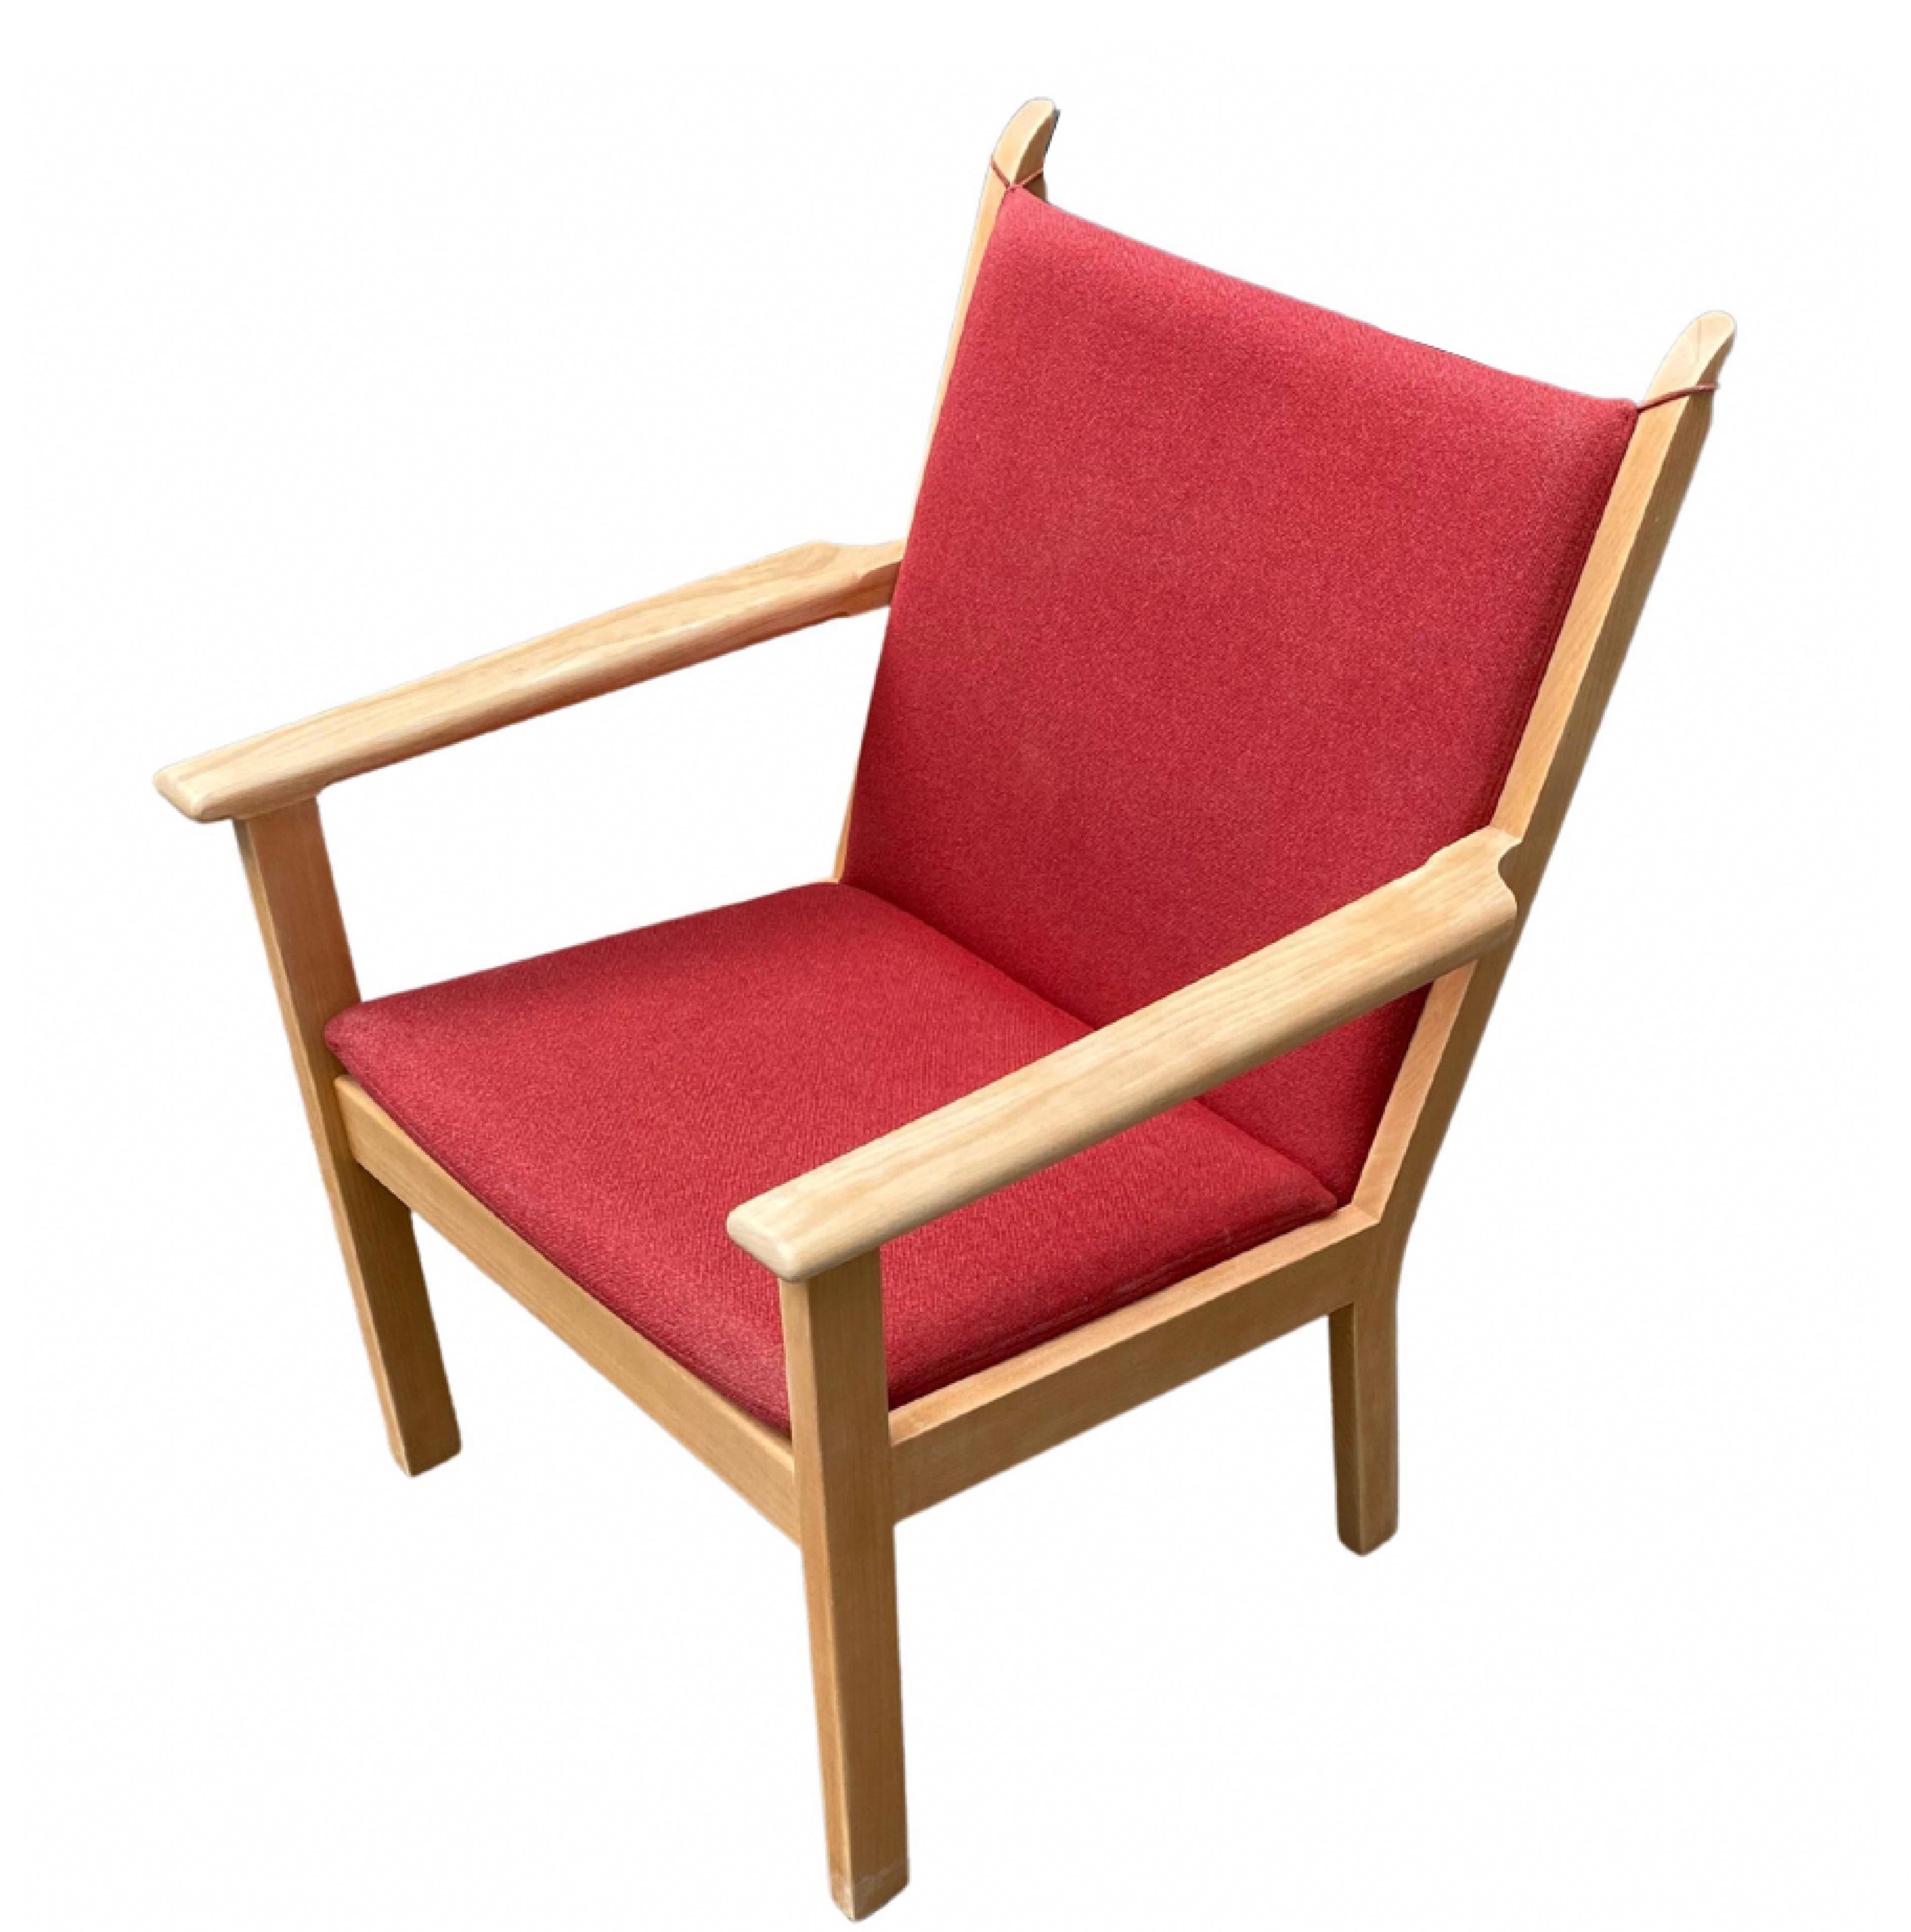 Lounge chair by the probably most famous Danish furniture designer Hans J. Wegner. 

Model 